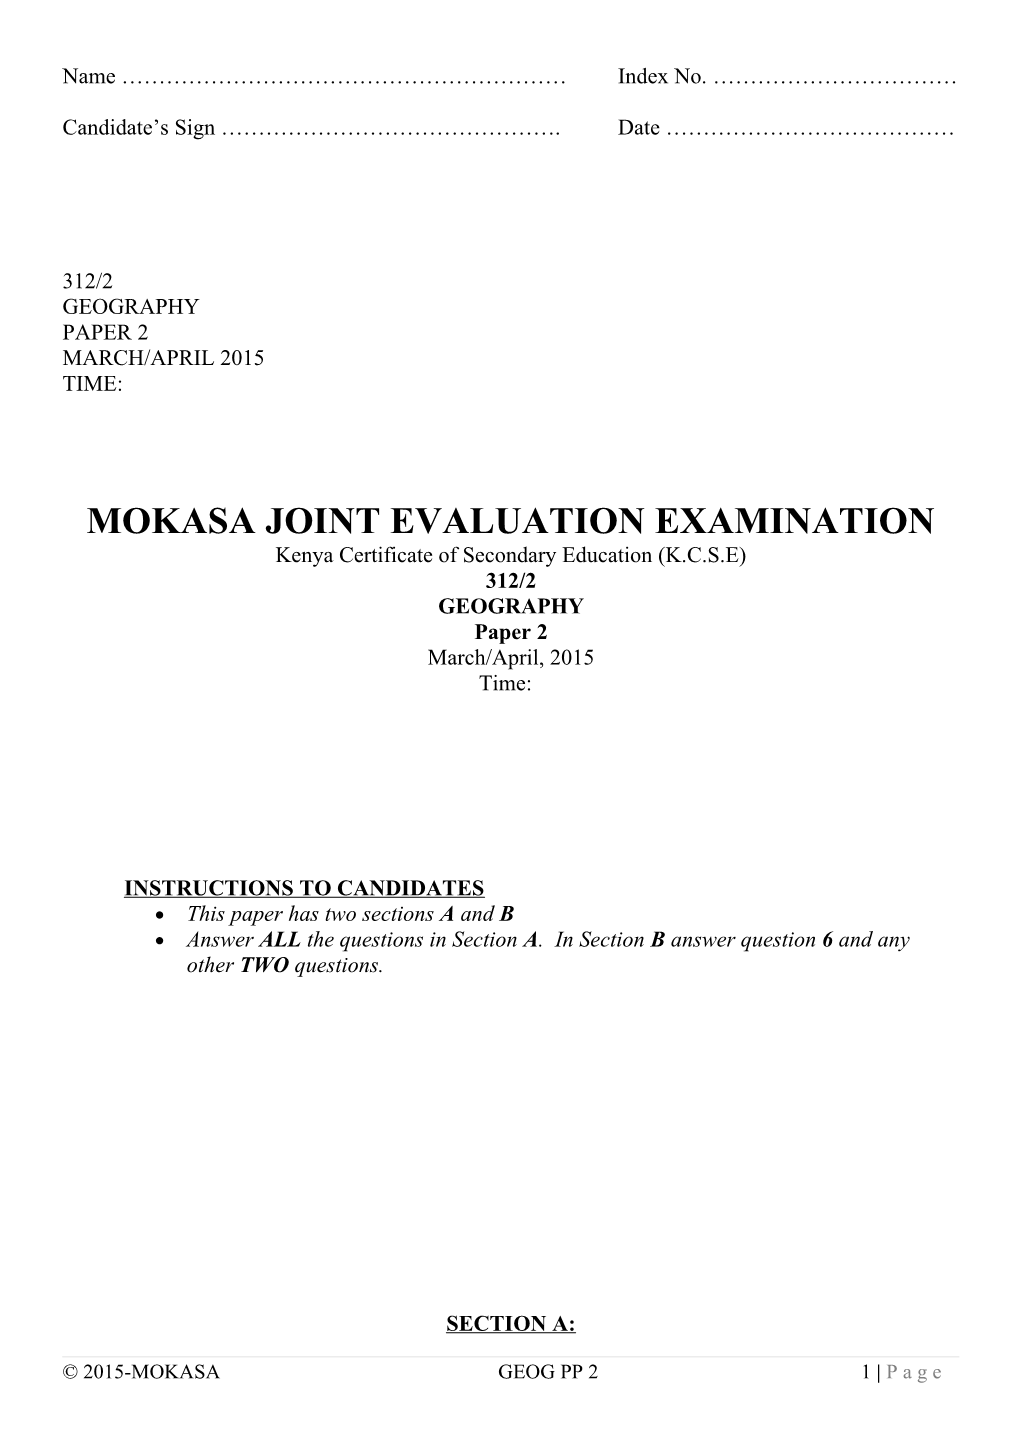 Mokasa Joint Evaluation Examination